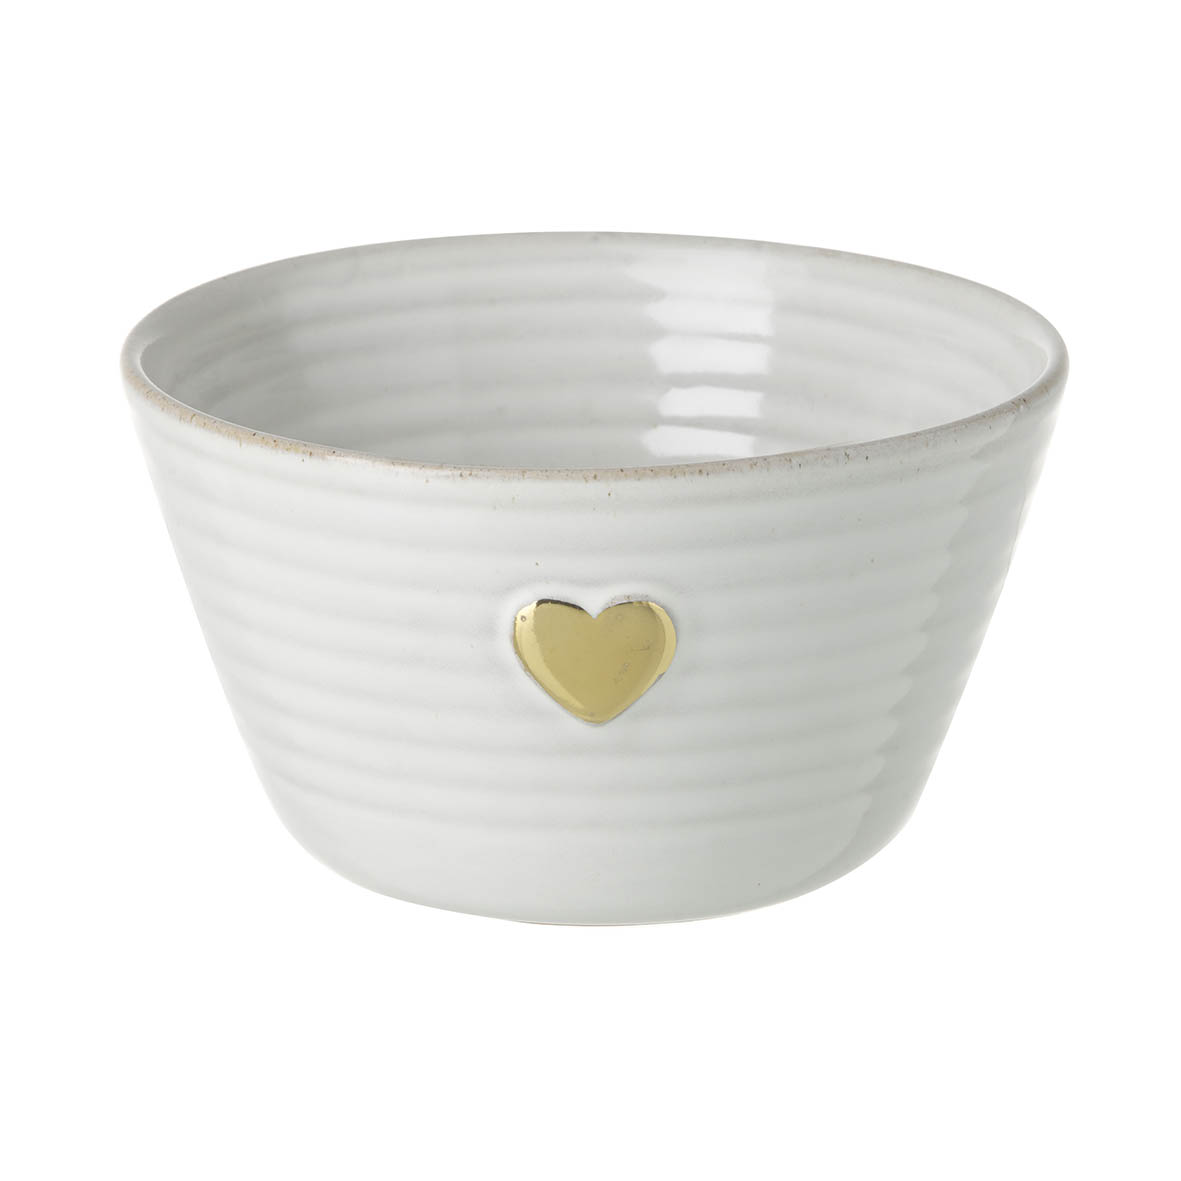 Bowl Ø16x8 cm GOLD HEART cream porcelain